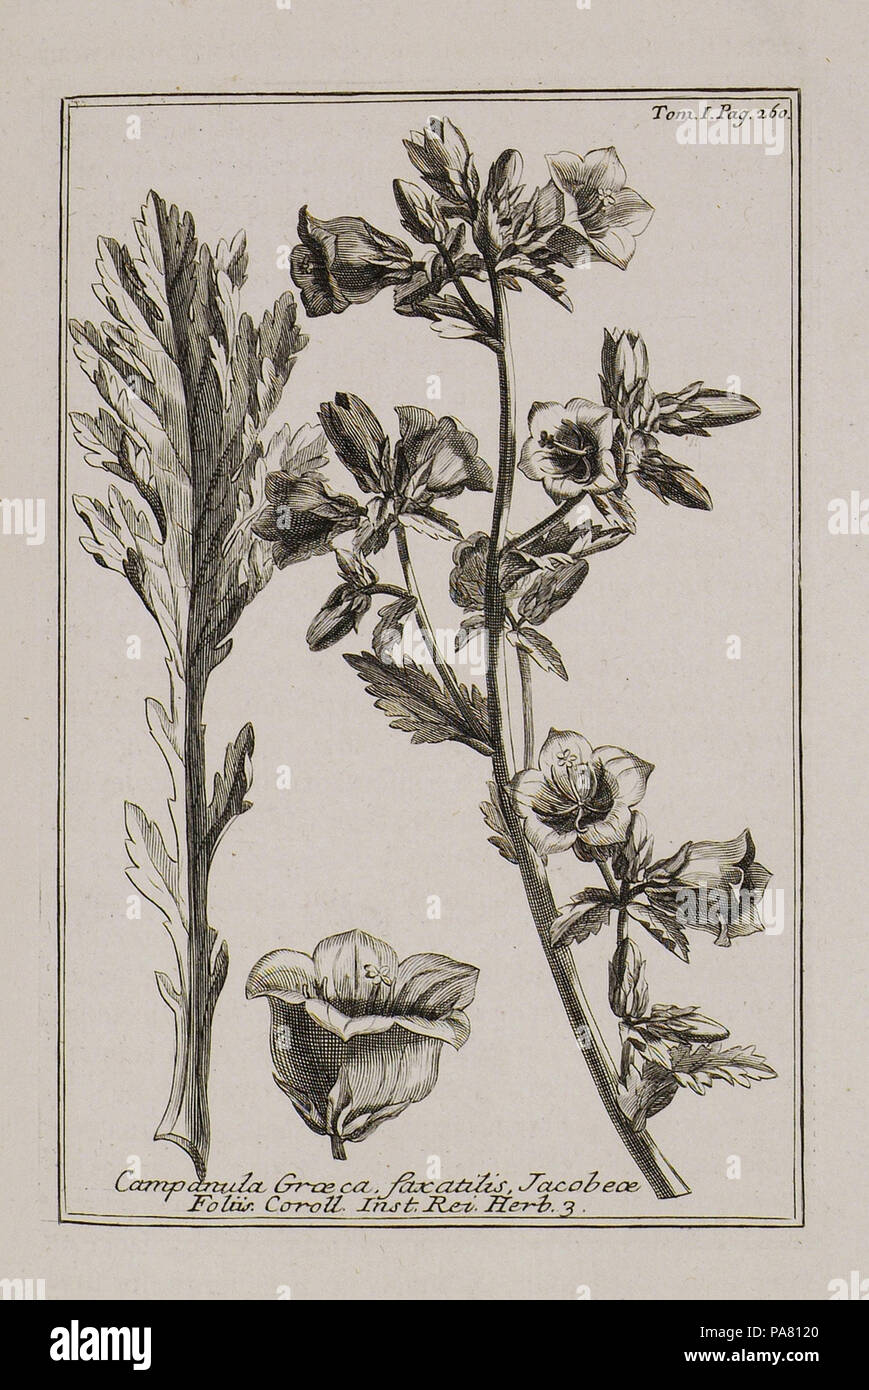 44 Campanula Graeca, faxatilis Jacobae folio Coroll Inst Rei herb 3 - Tournefort Joseph Pitton De - 1717 Stock Photo